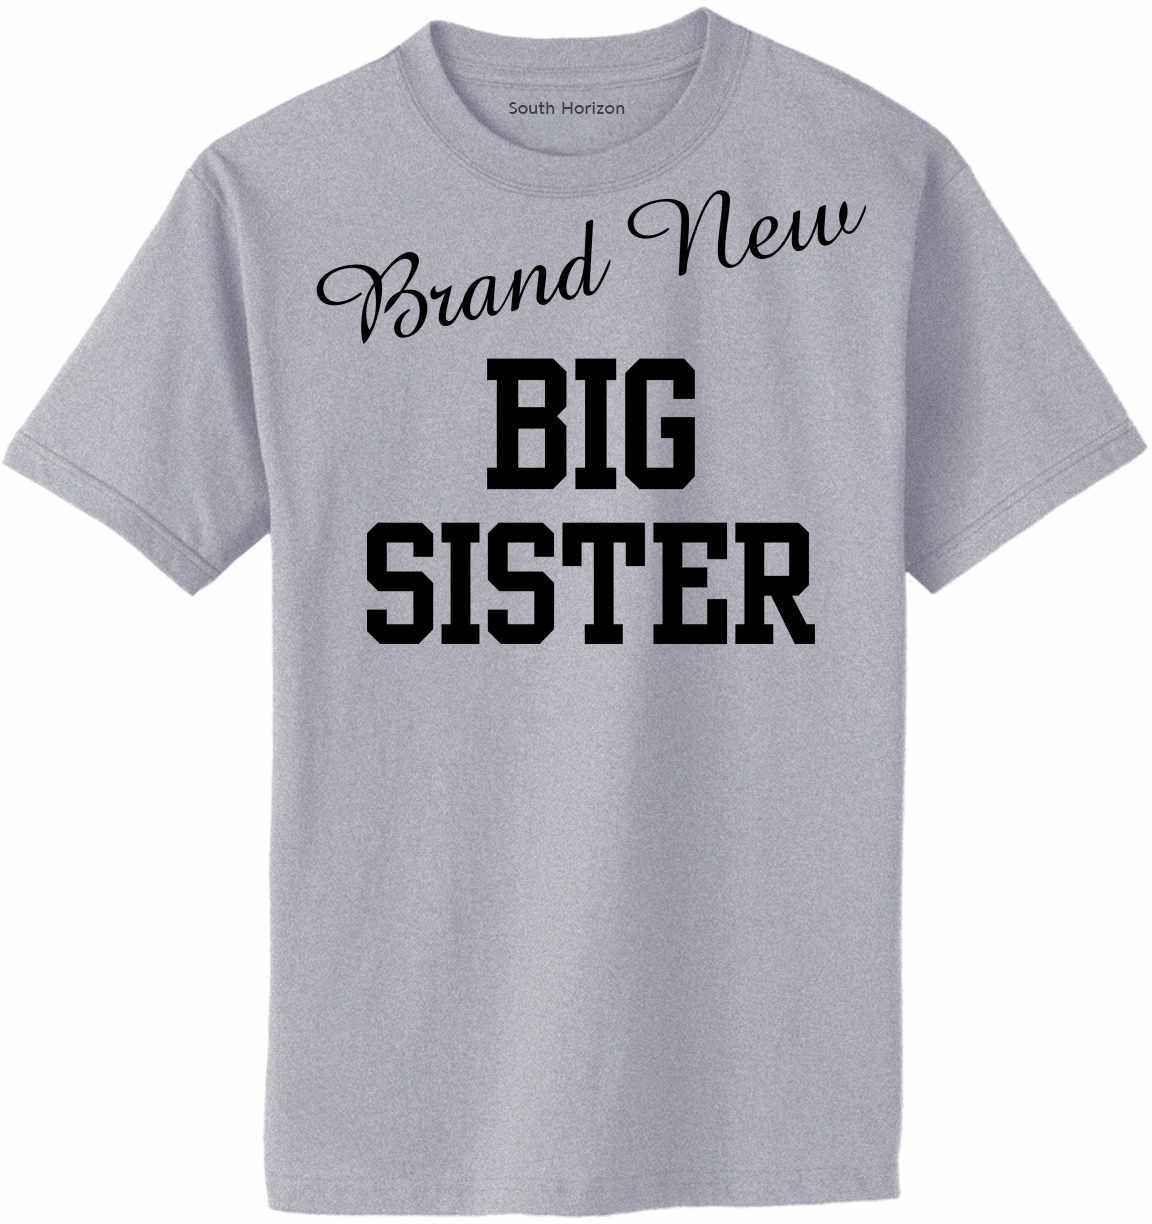 Brand New Big Sister Adult T-Shirt (#1000-1)